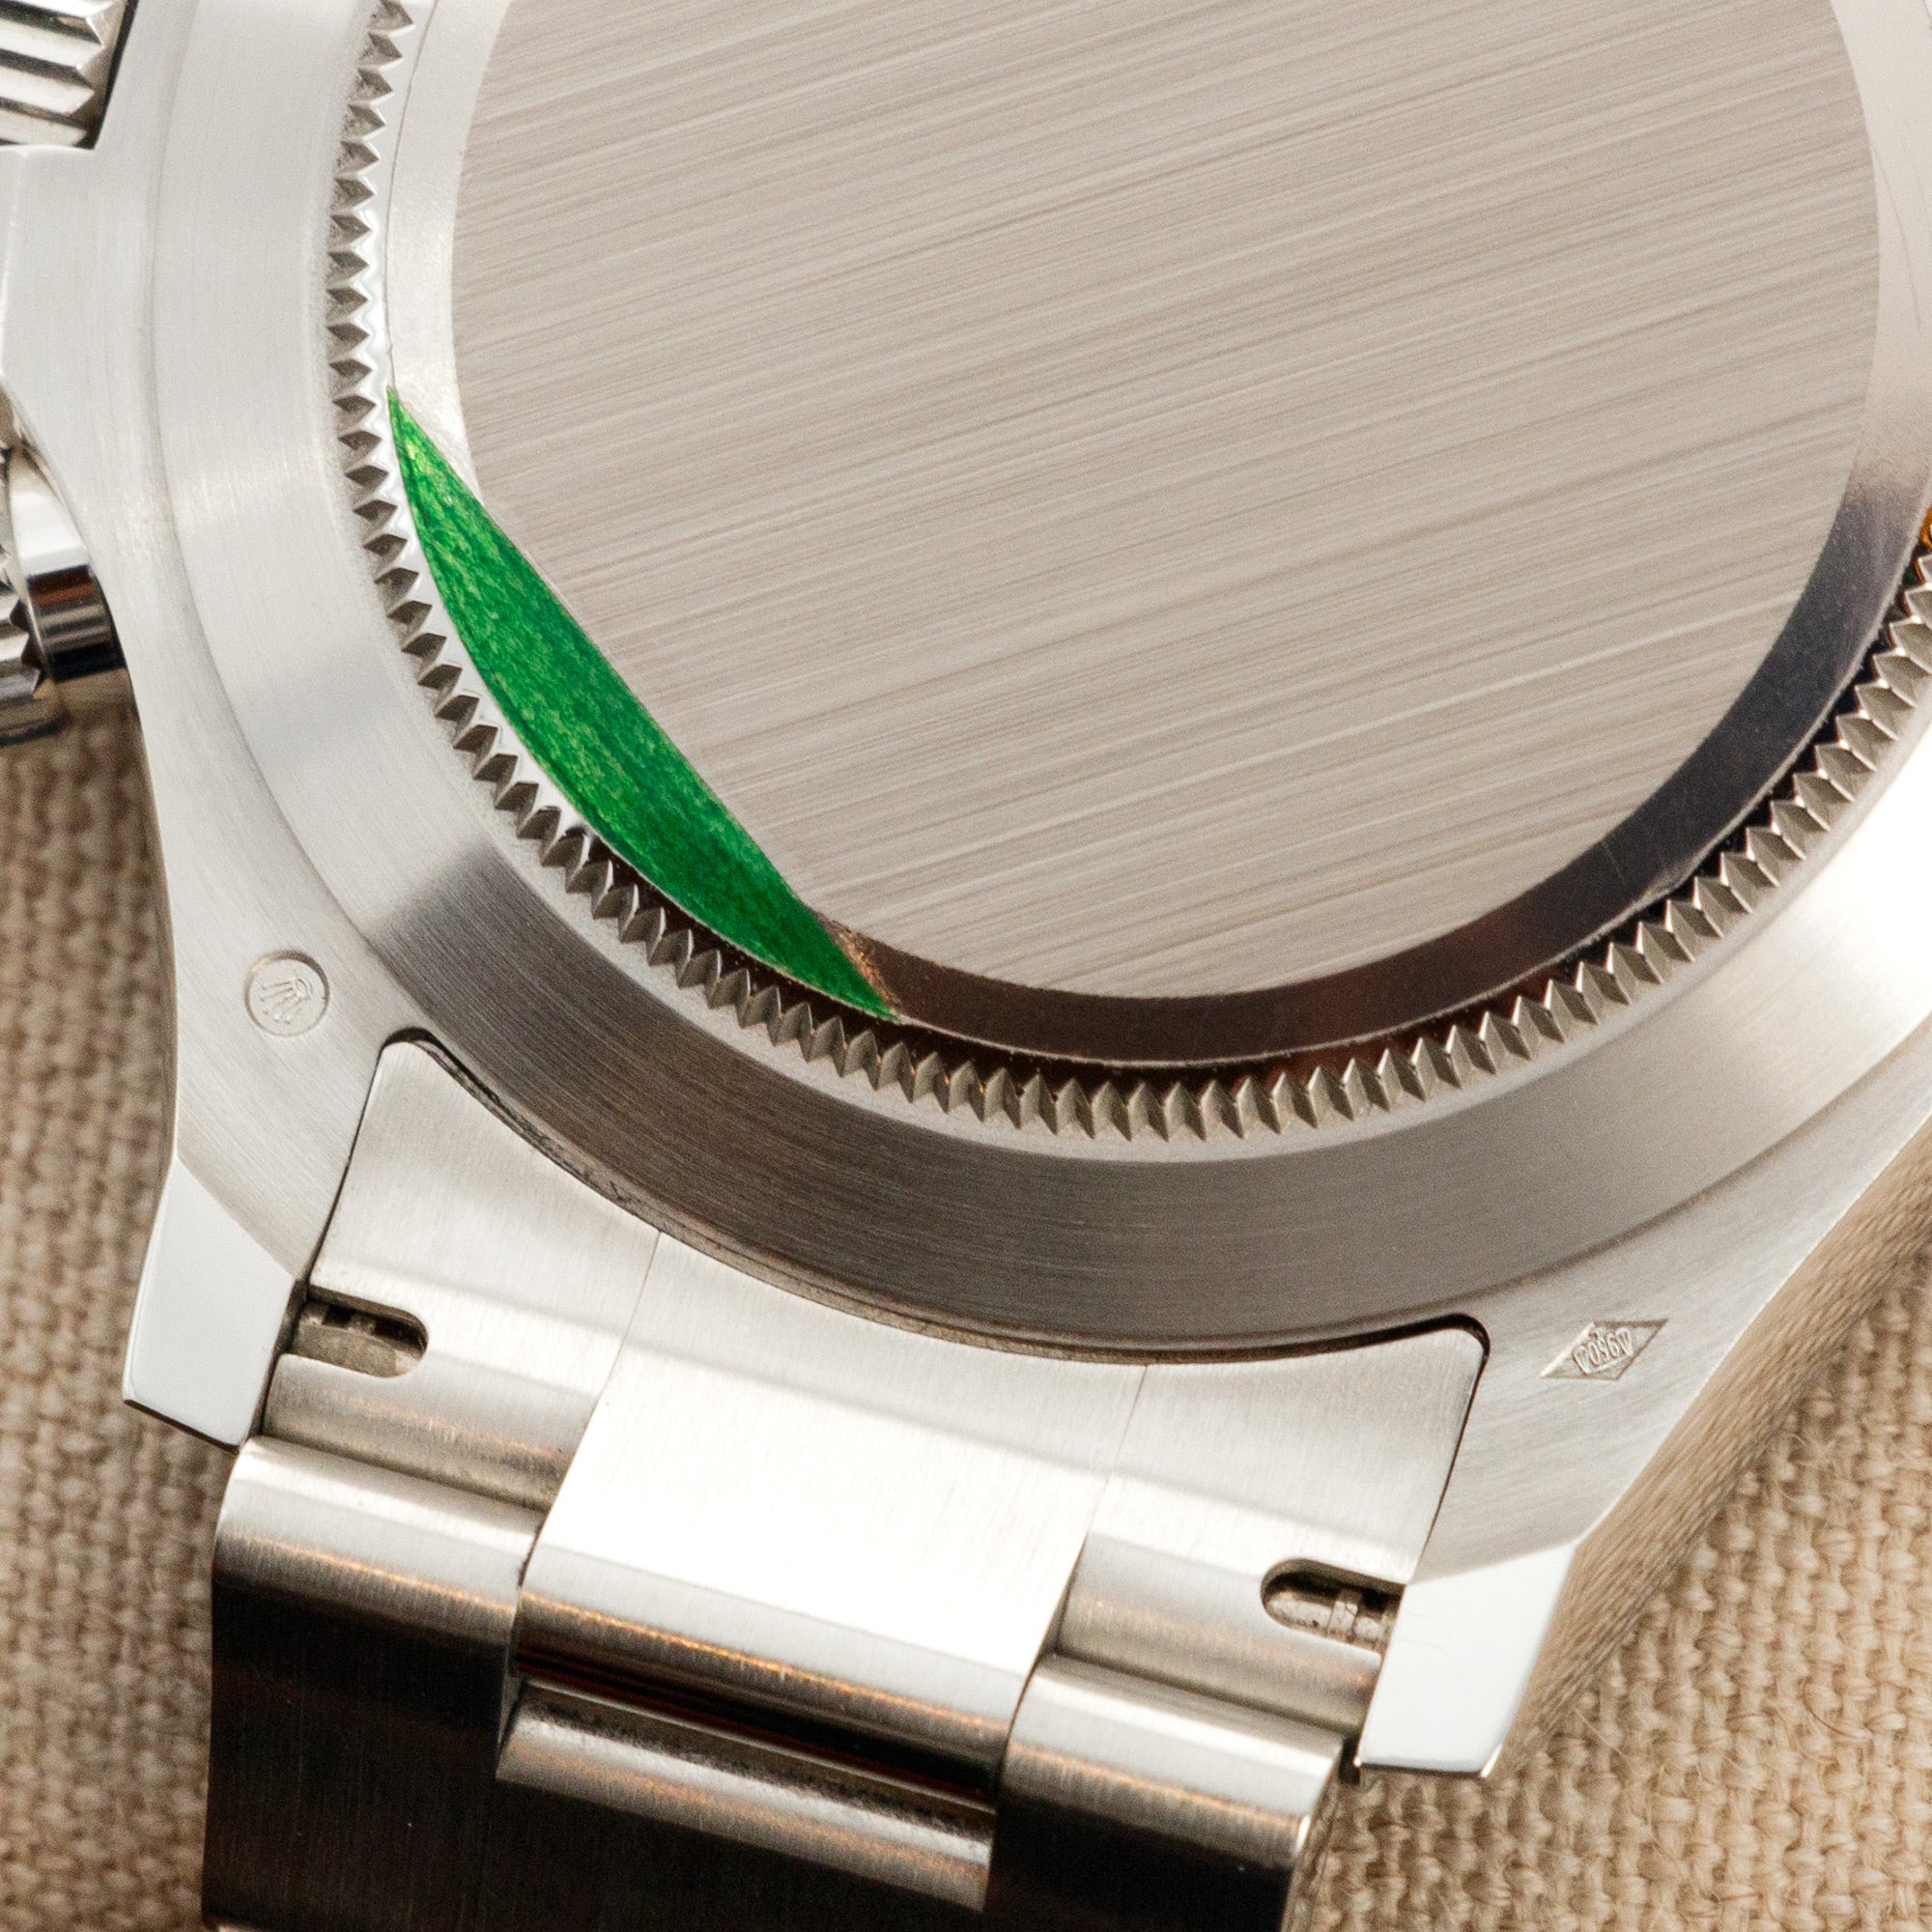 Rolex - Rolex Platinum Daytona Watch Ref. 116506 with Baguette Diamond Markers - The Keystone Watches